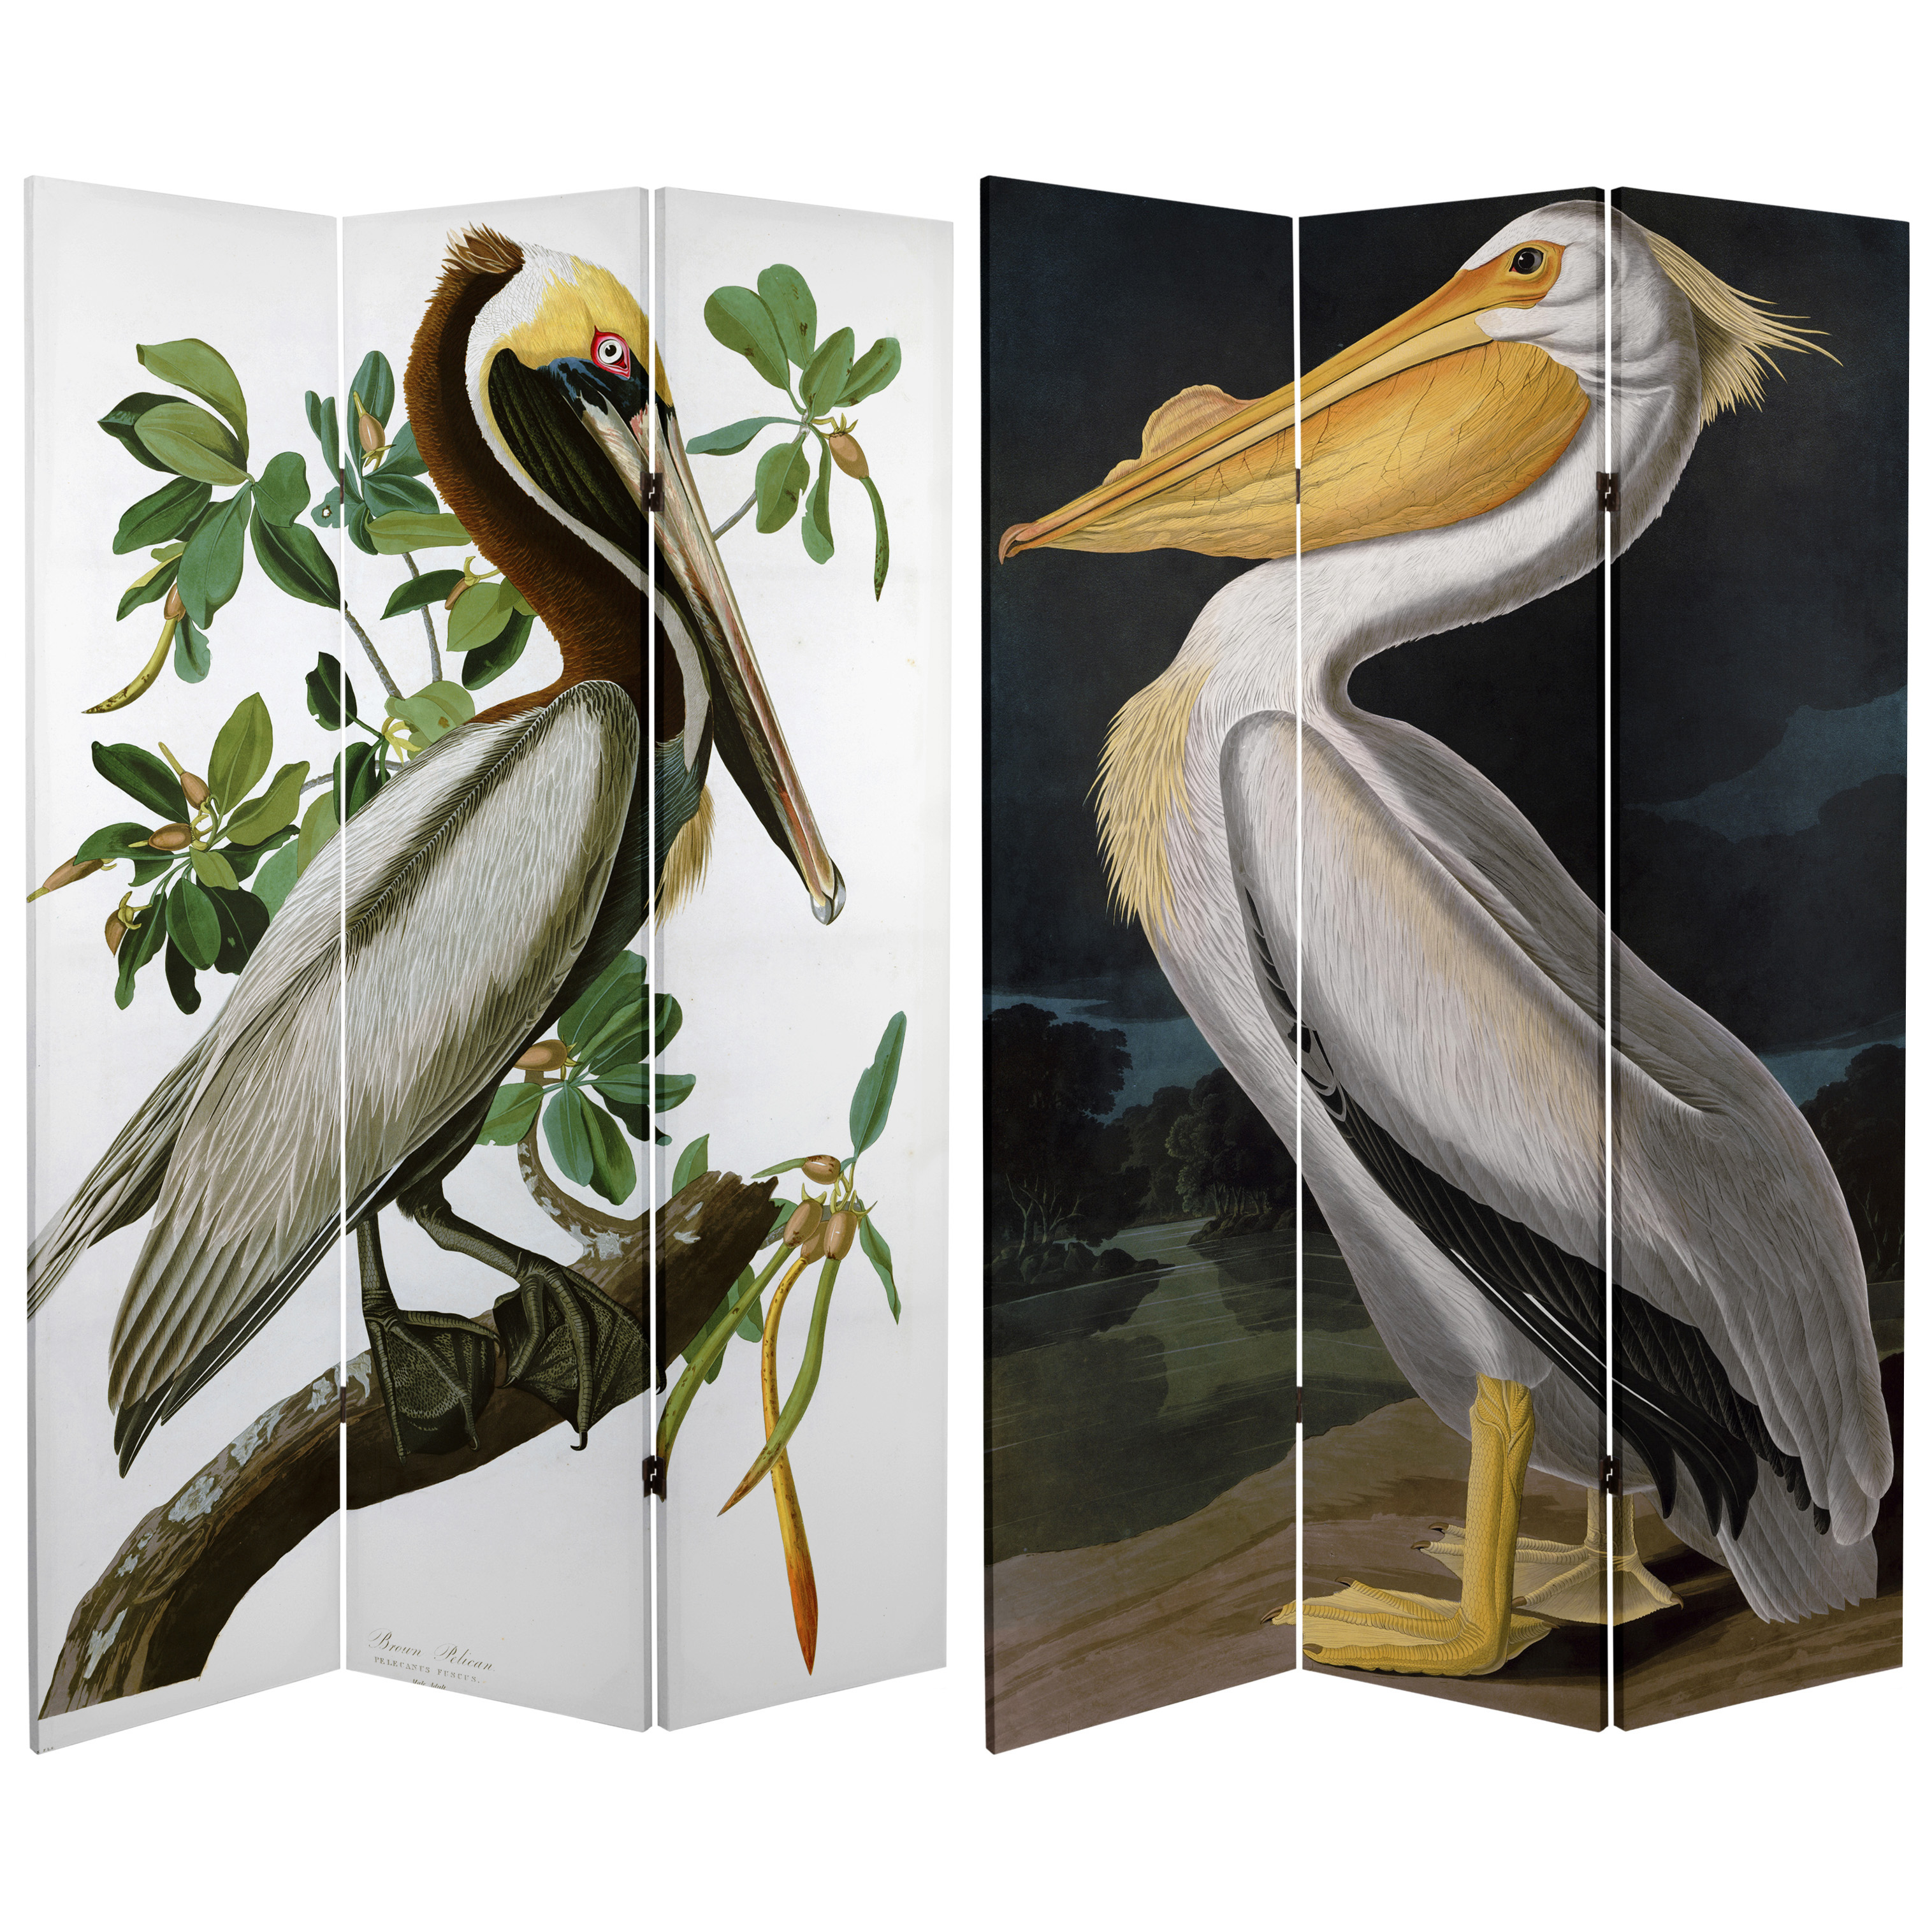 6 ft. Tall Audubon Pelican Canvas Print Room Divider Floor Screen - image 1 of 3